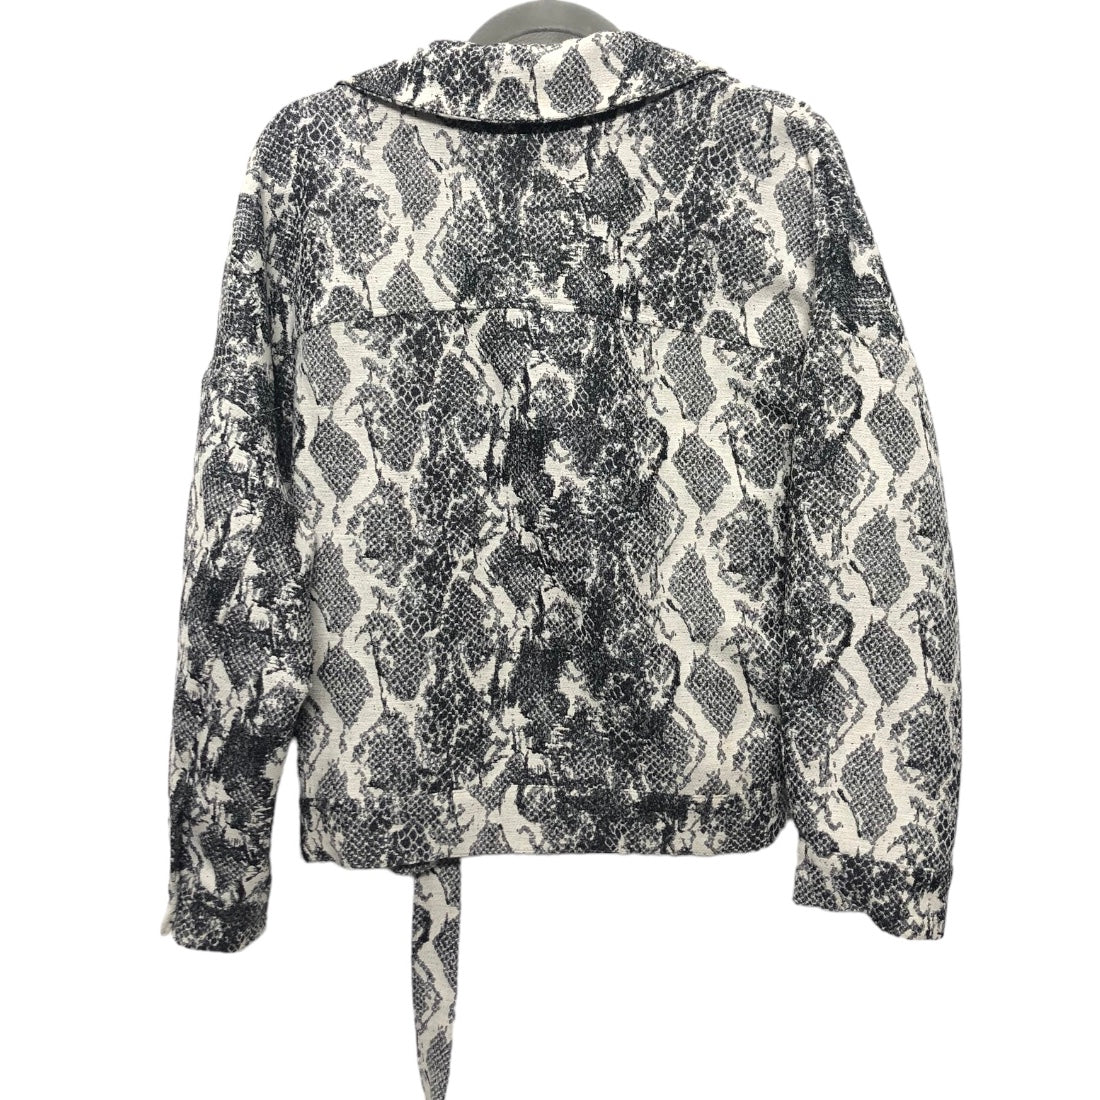 Snakeskin Print Jacket Other Zara Basic, Size M